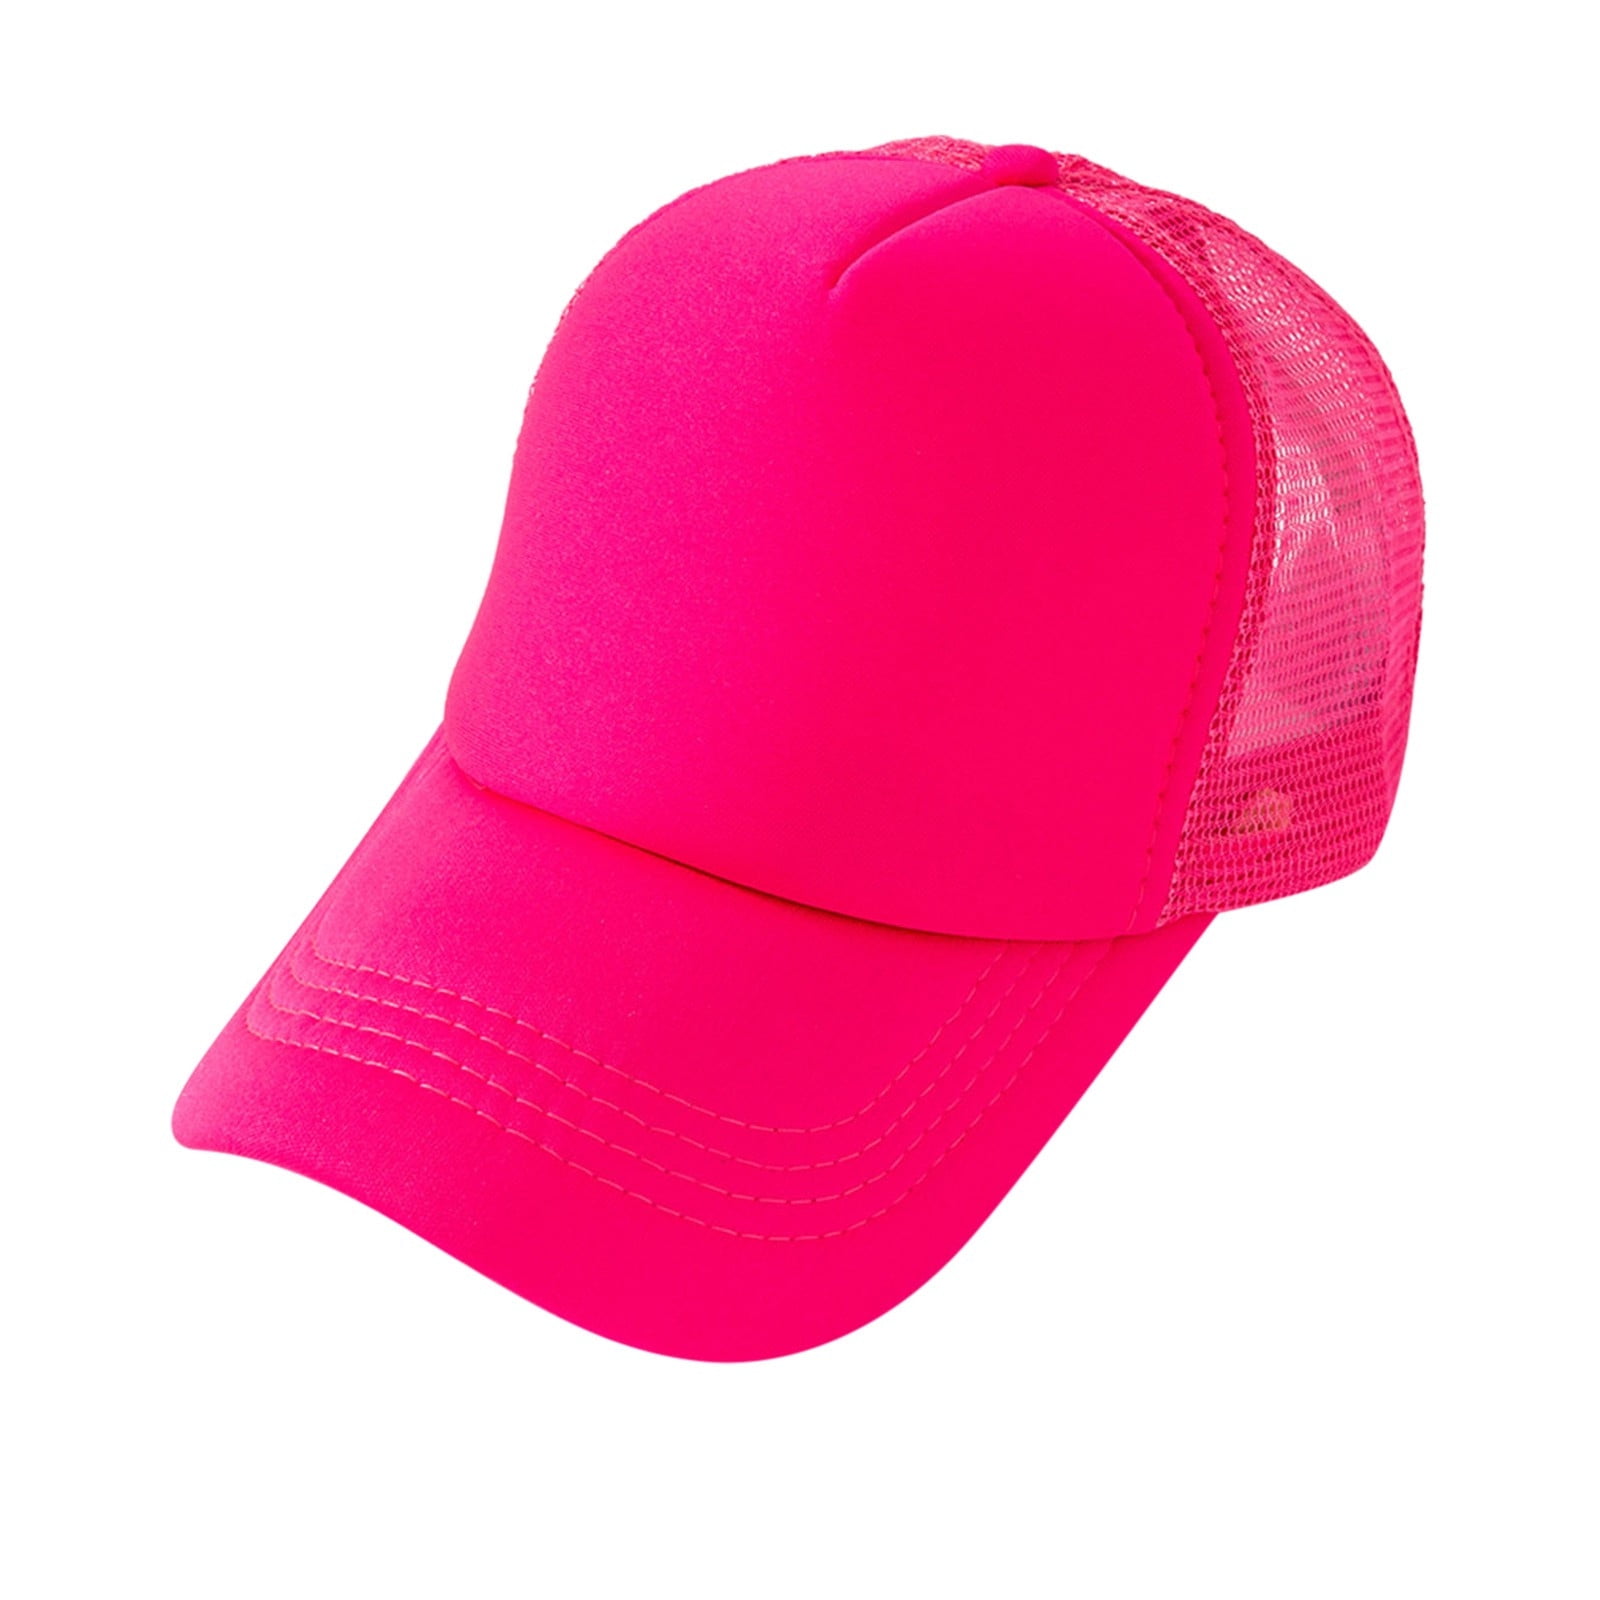 2DXuixsh Mesh Hat Tie Dye Baseball Cap Men's and Women's Fashion